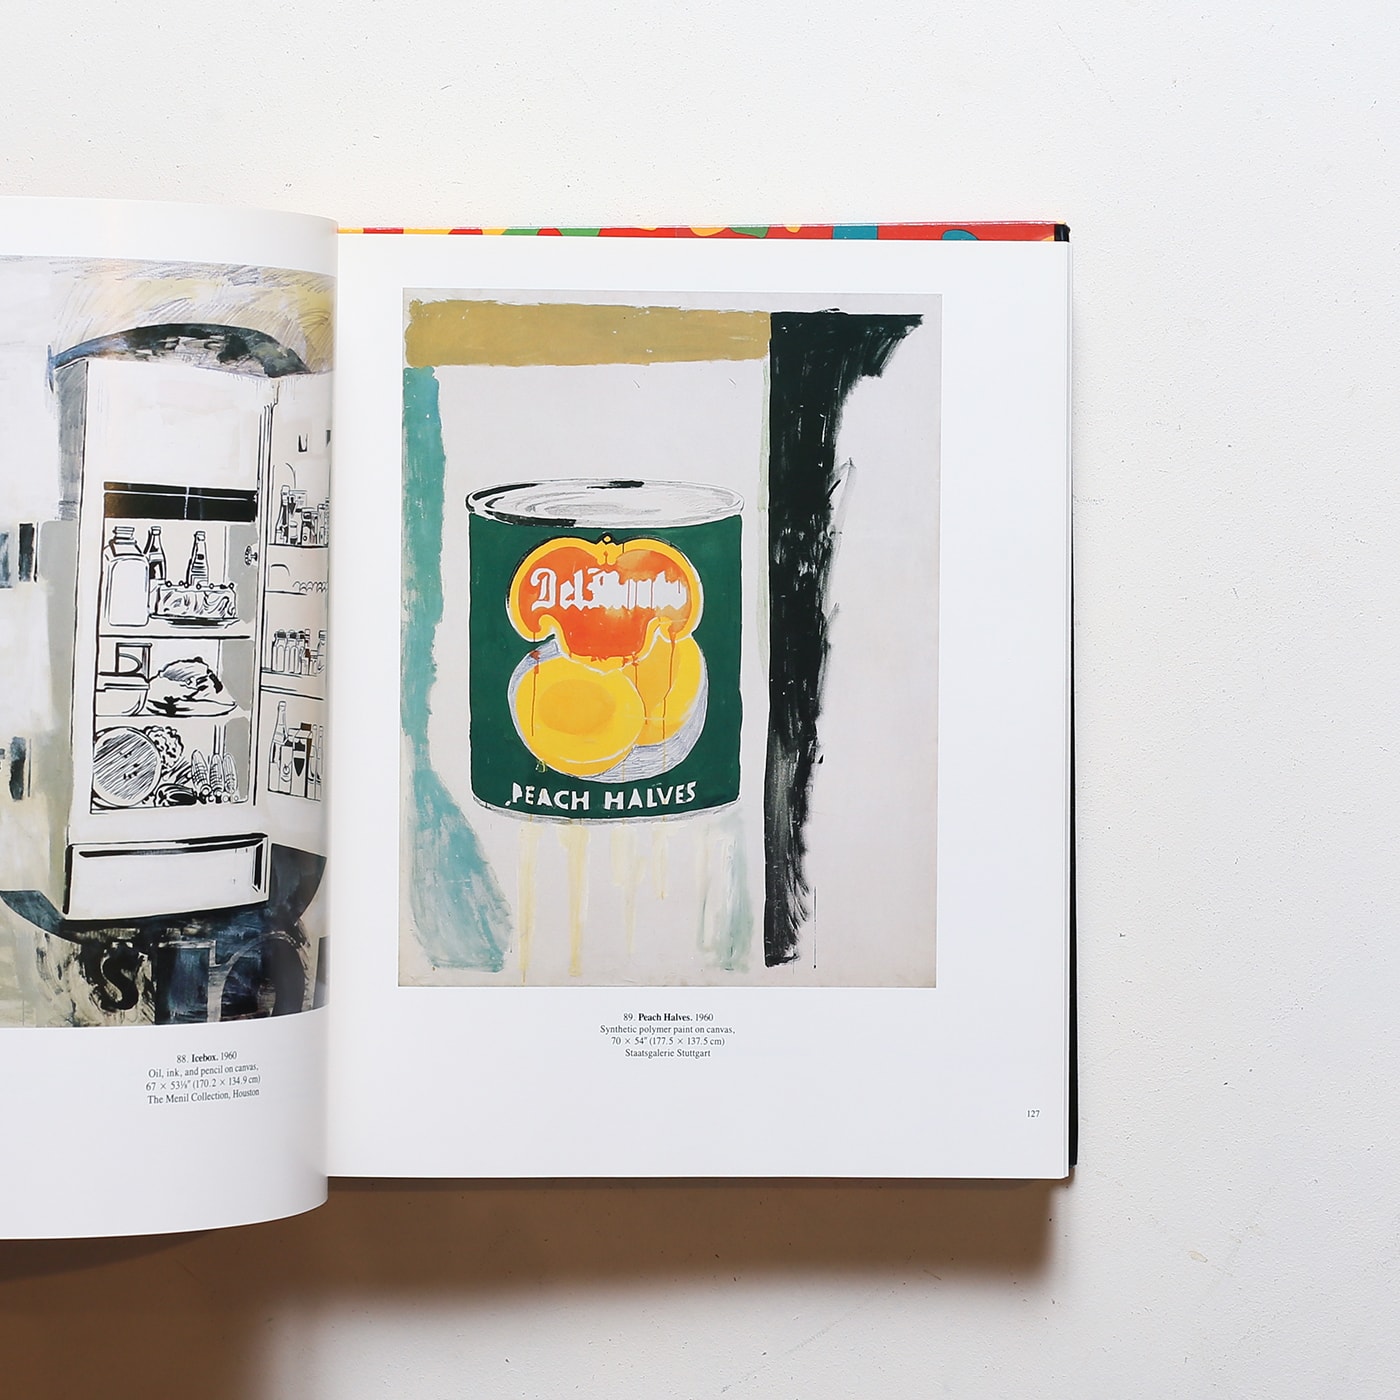 Andy Warhol: A Retrospective ハードカバー版 | アンディ・ウォーホル | nostos books ノストスブックス